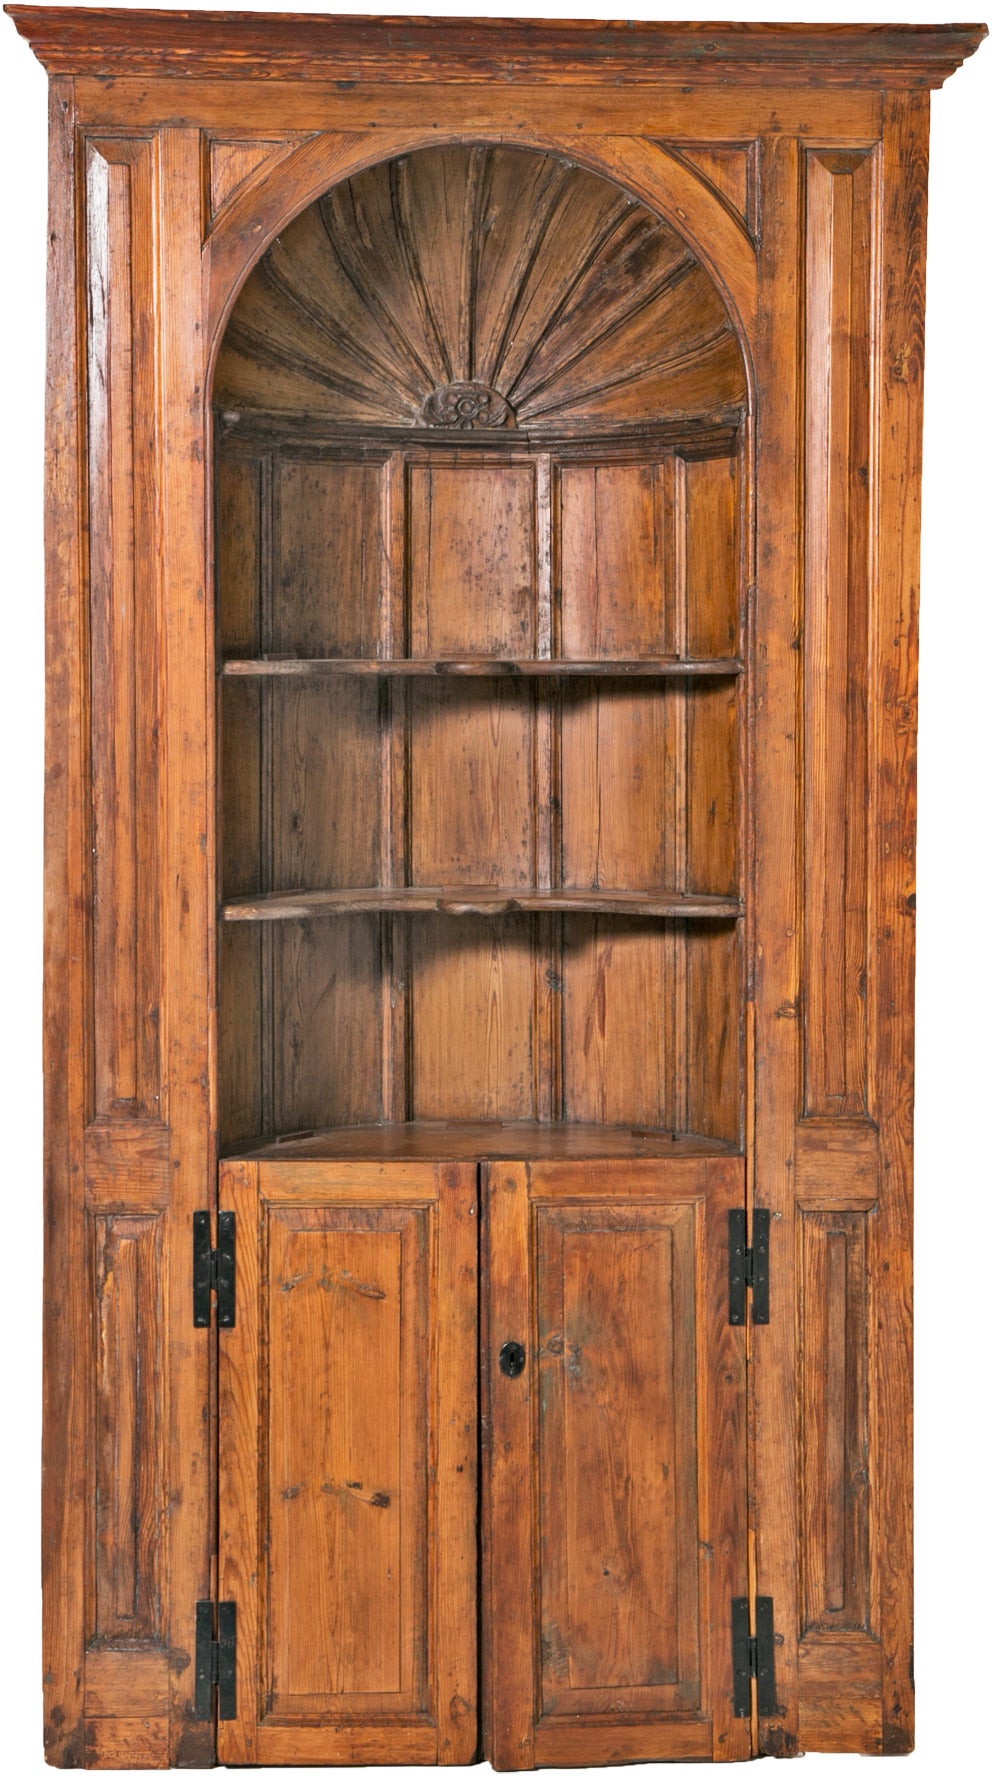 Late 18th century English Corner Cupboard – Cabinet